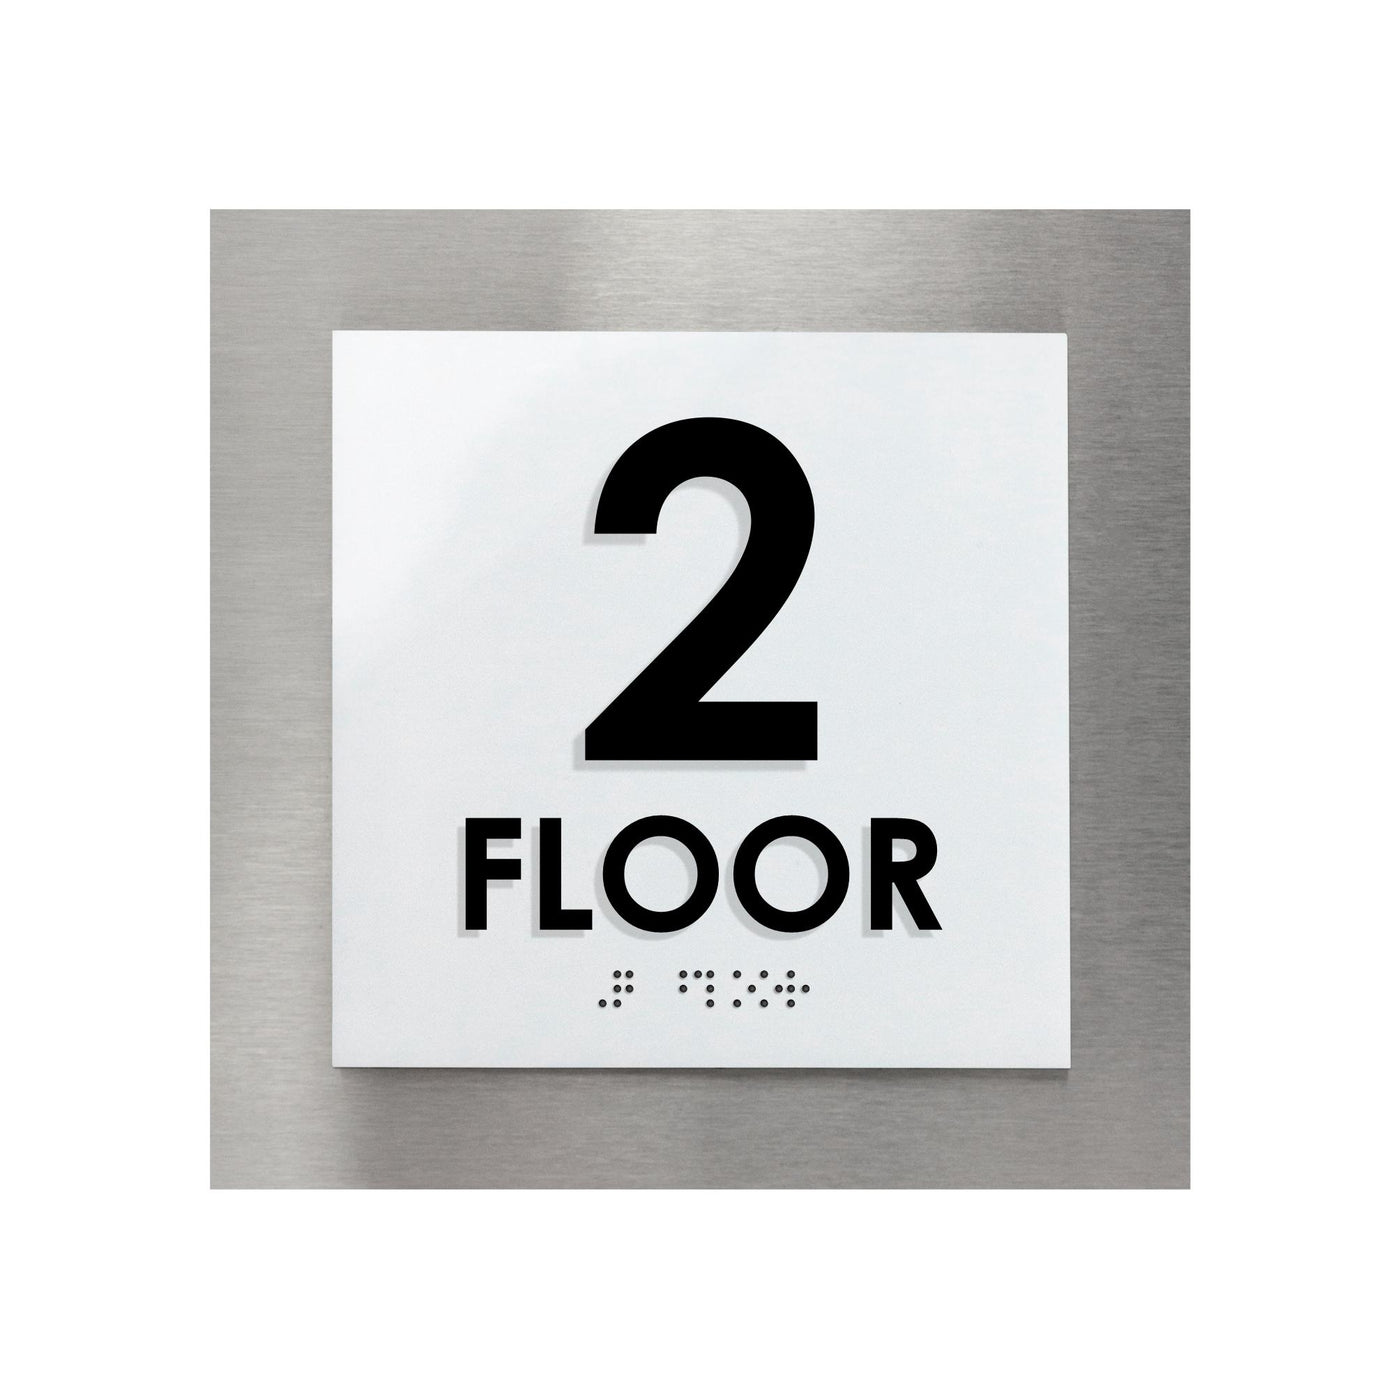 Floor Signs - Sign For 2nd Floor - Interior Stainless Steel Sign - "Modern" Design